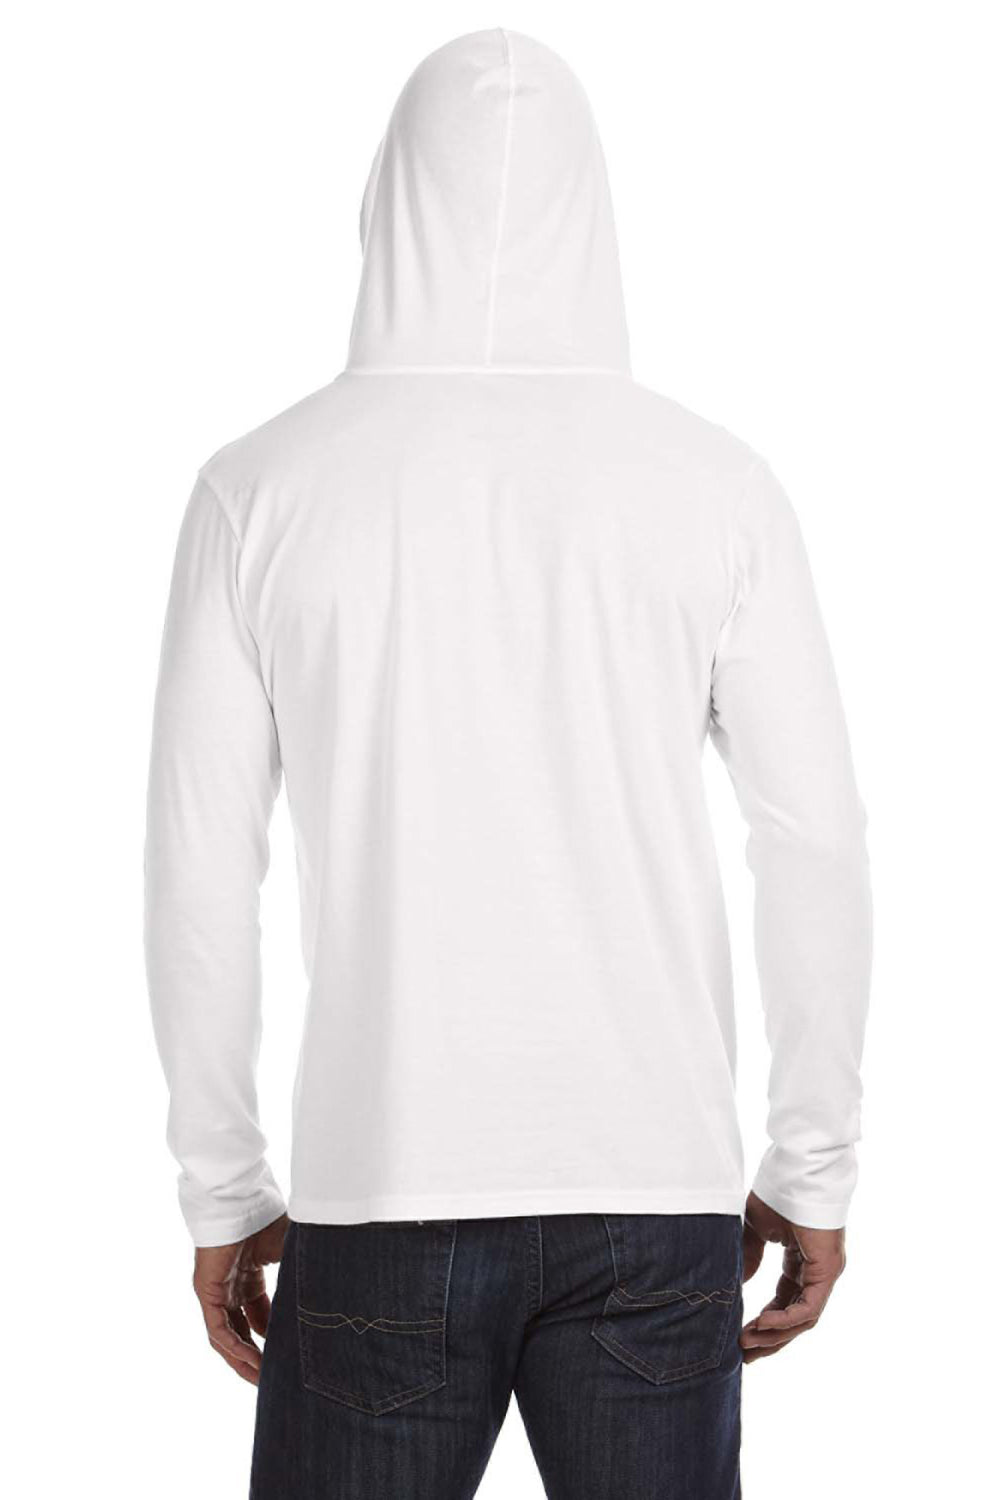 Anvil 987AN Mens Long Sleeve Hooded T-Shirt Hoodie White/Dark Grey Back